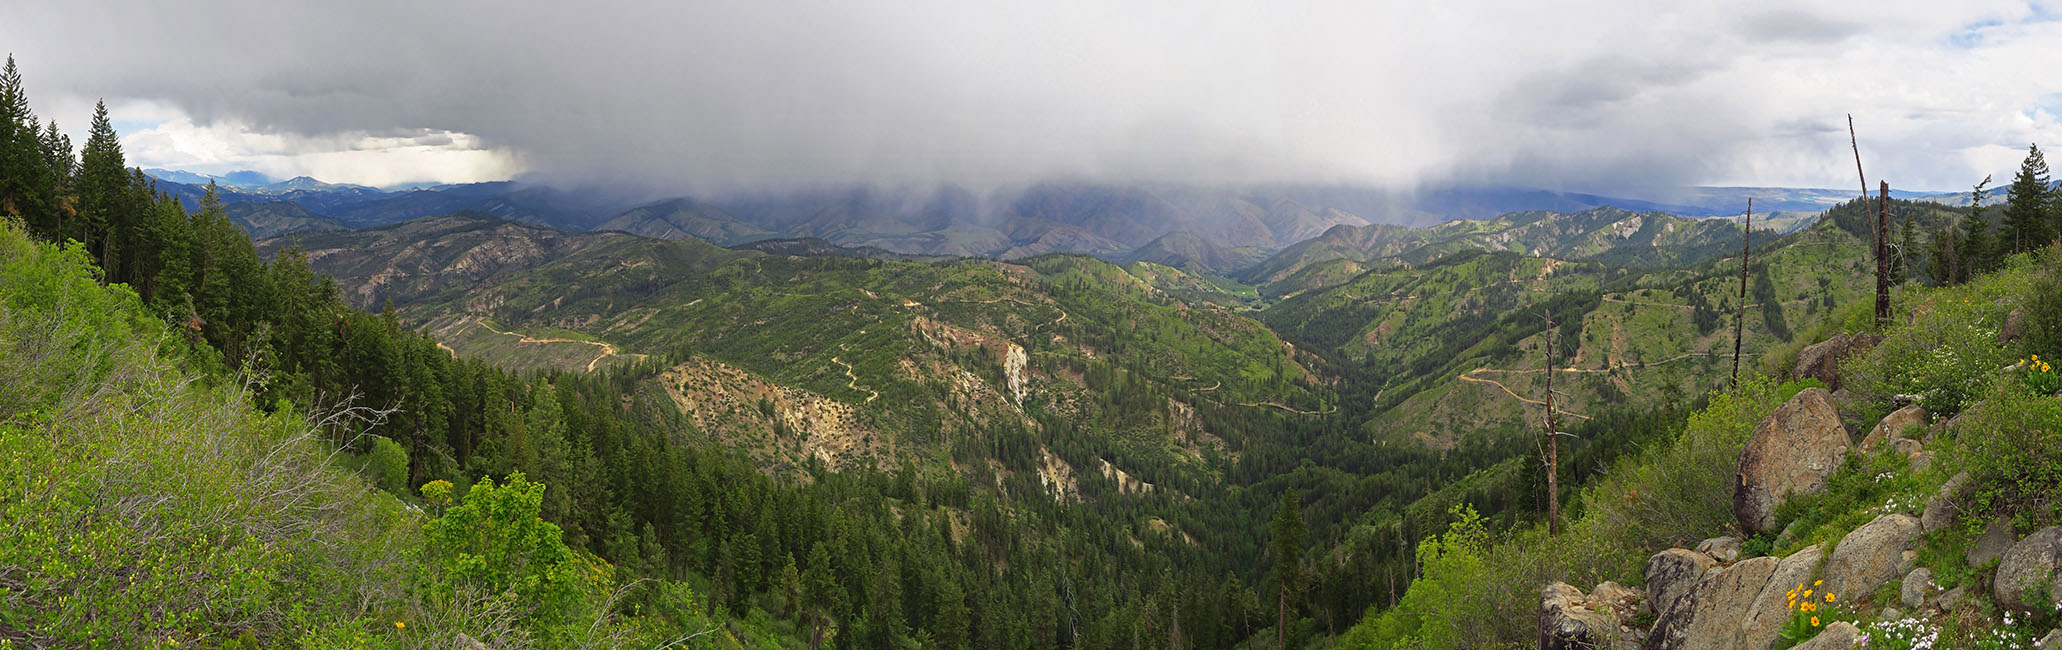 stormy Wenatchee Mountains panorama [Camas Meadows Natural Area Preserve, Chelan County, Washington]